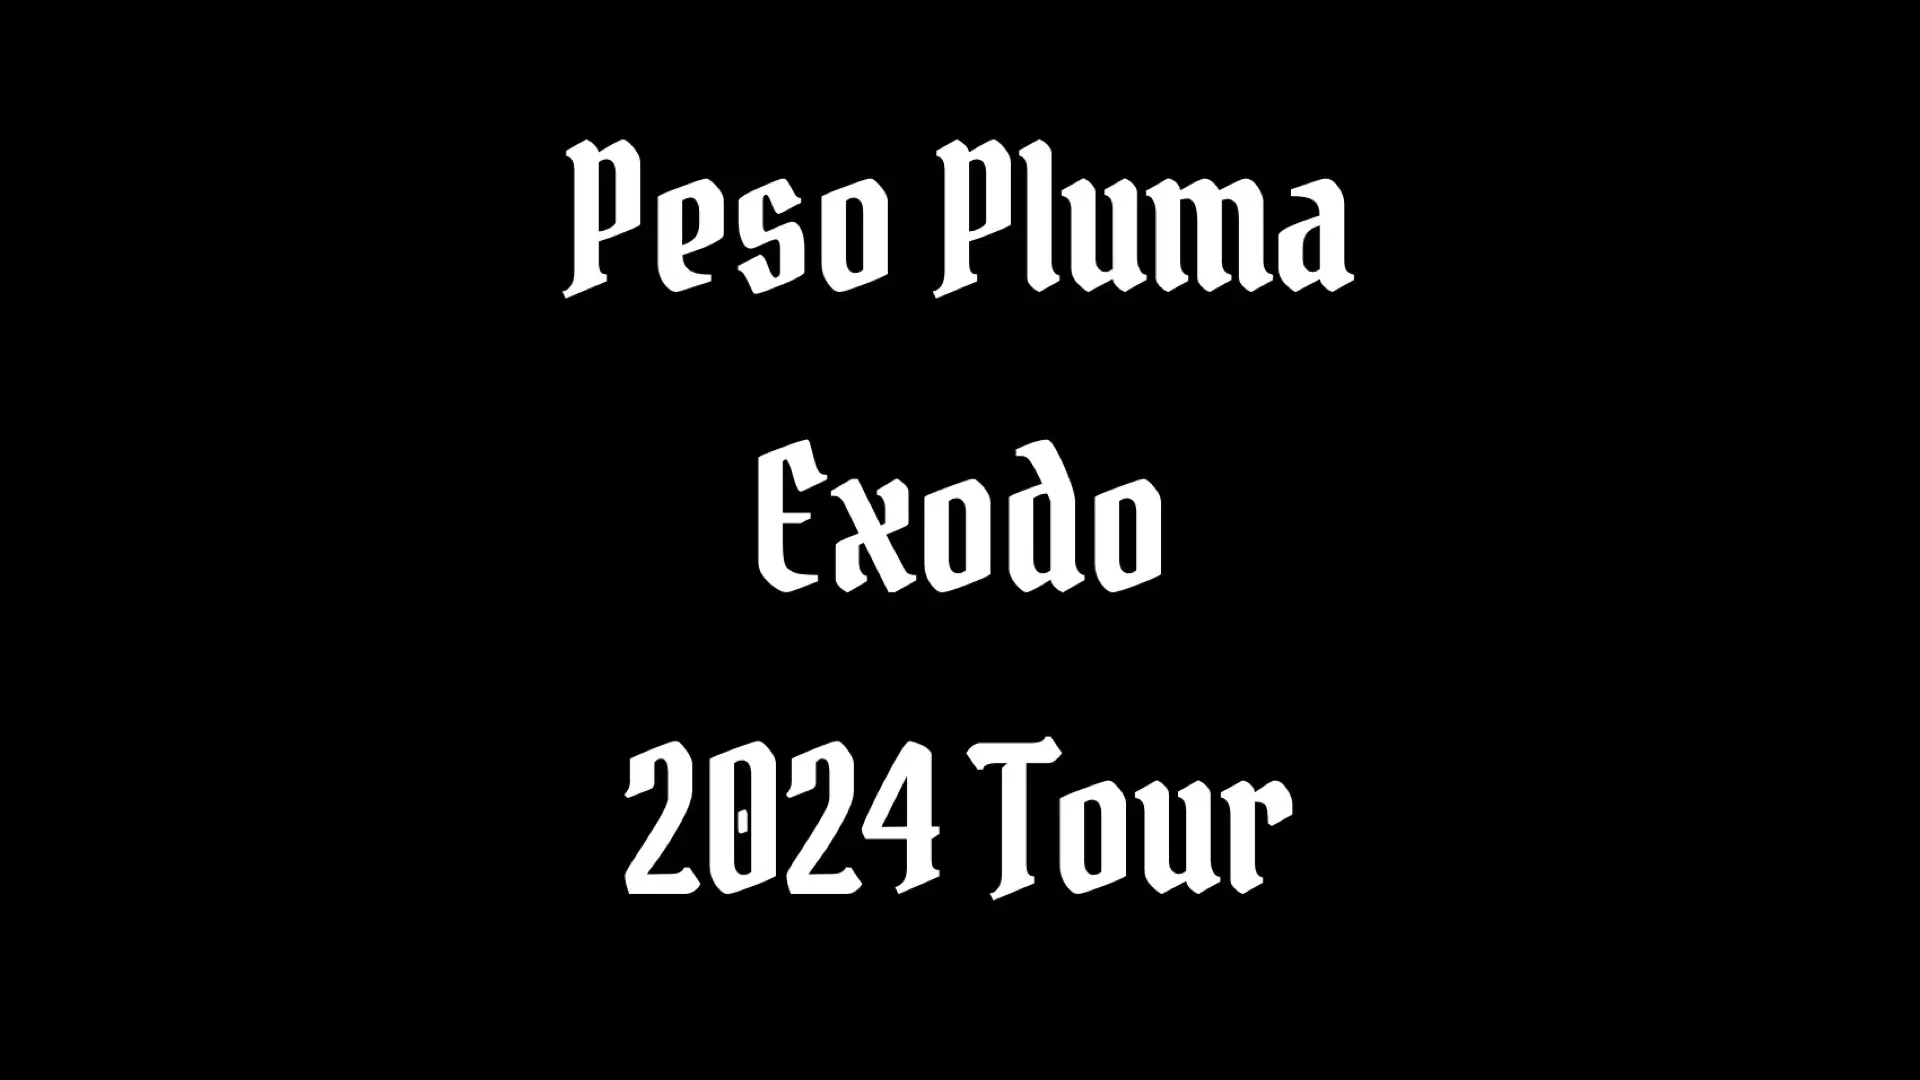 black background with text "Peso Pluma Exodo 2024 Tour" made by YJ